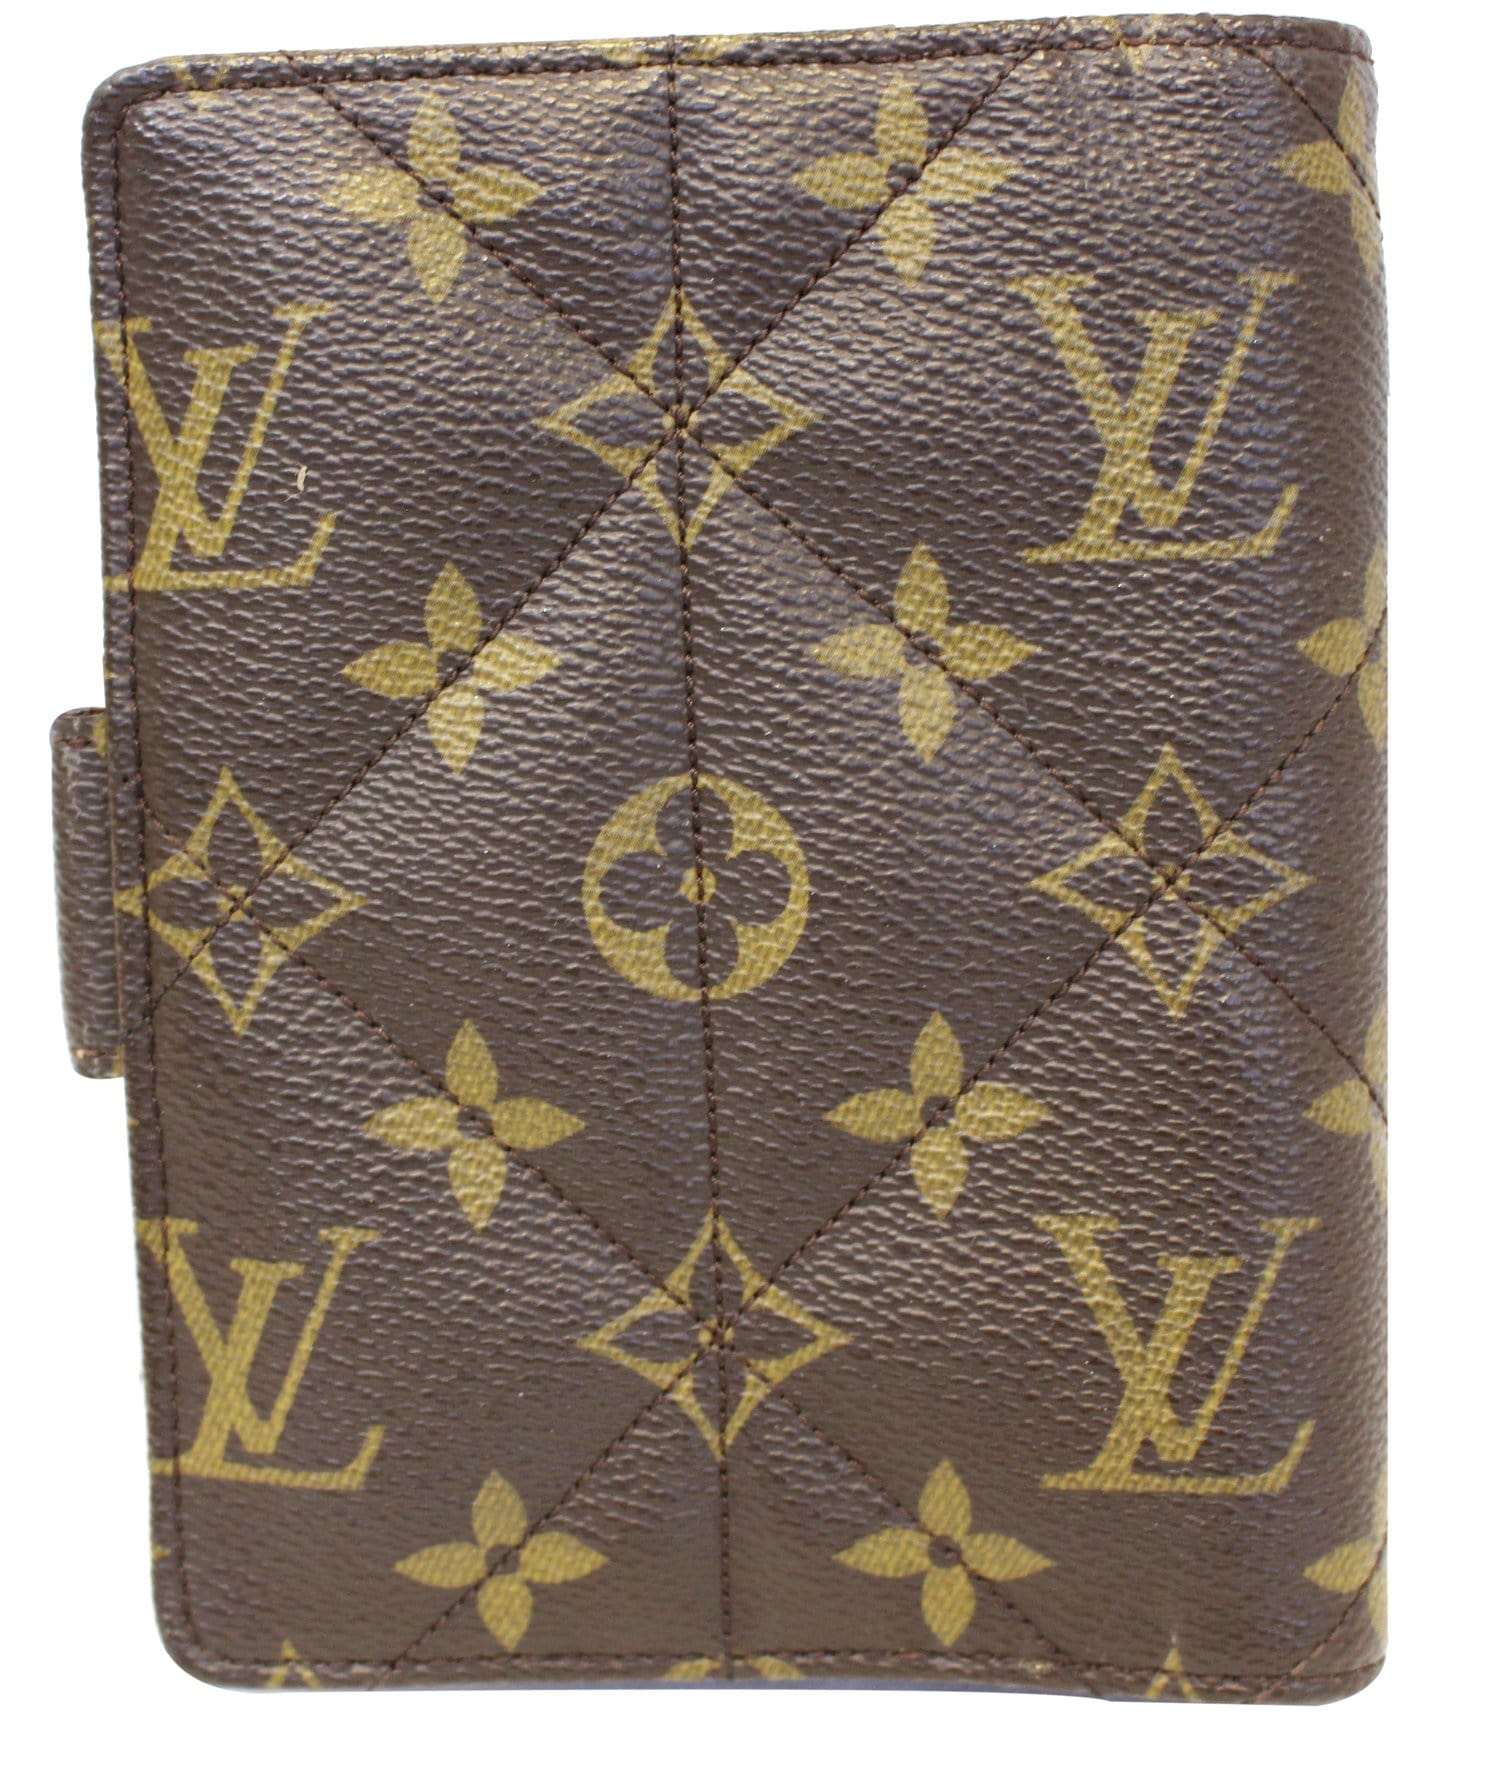 Louis Vuitton - MCM - Fendi - Dior Passport Cover / Holder